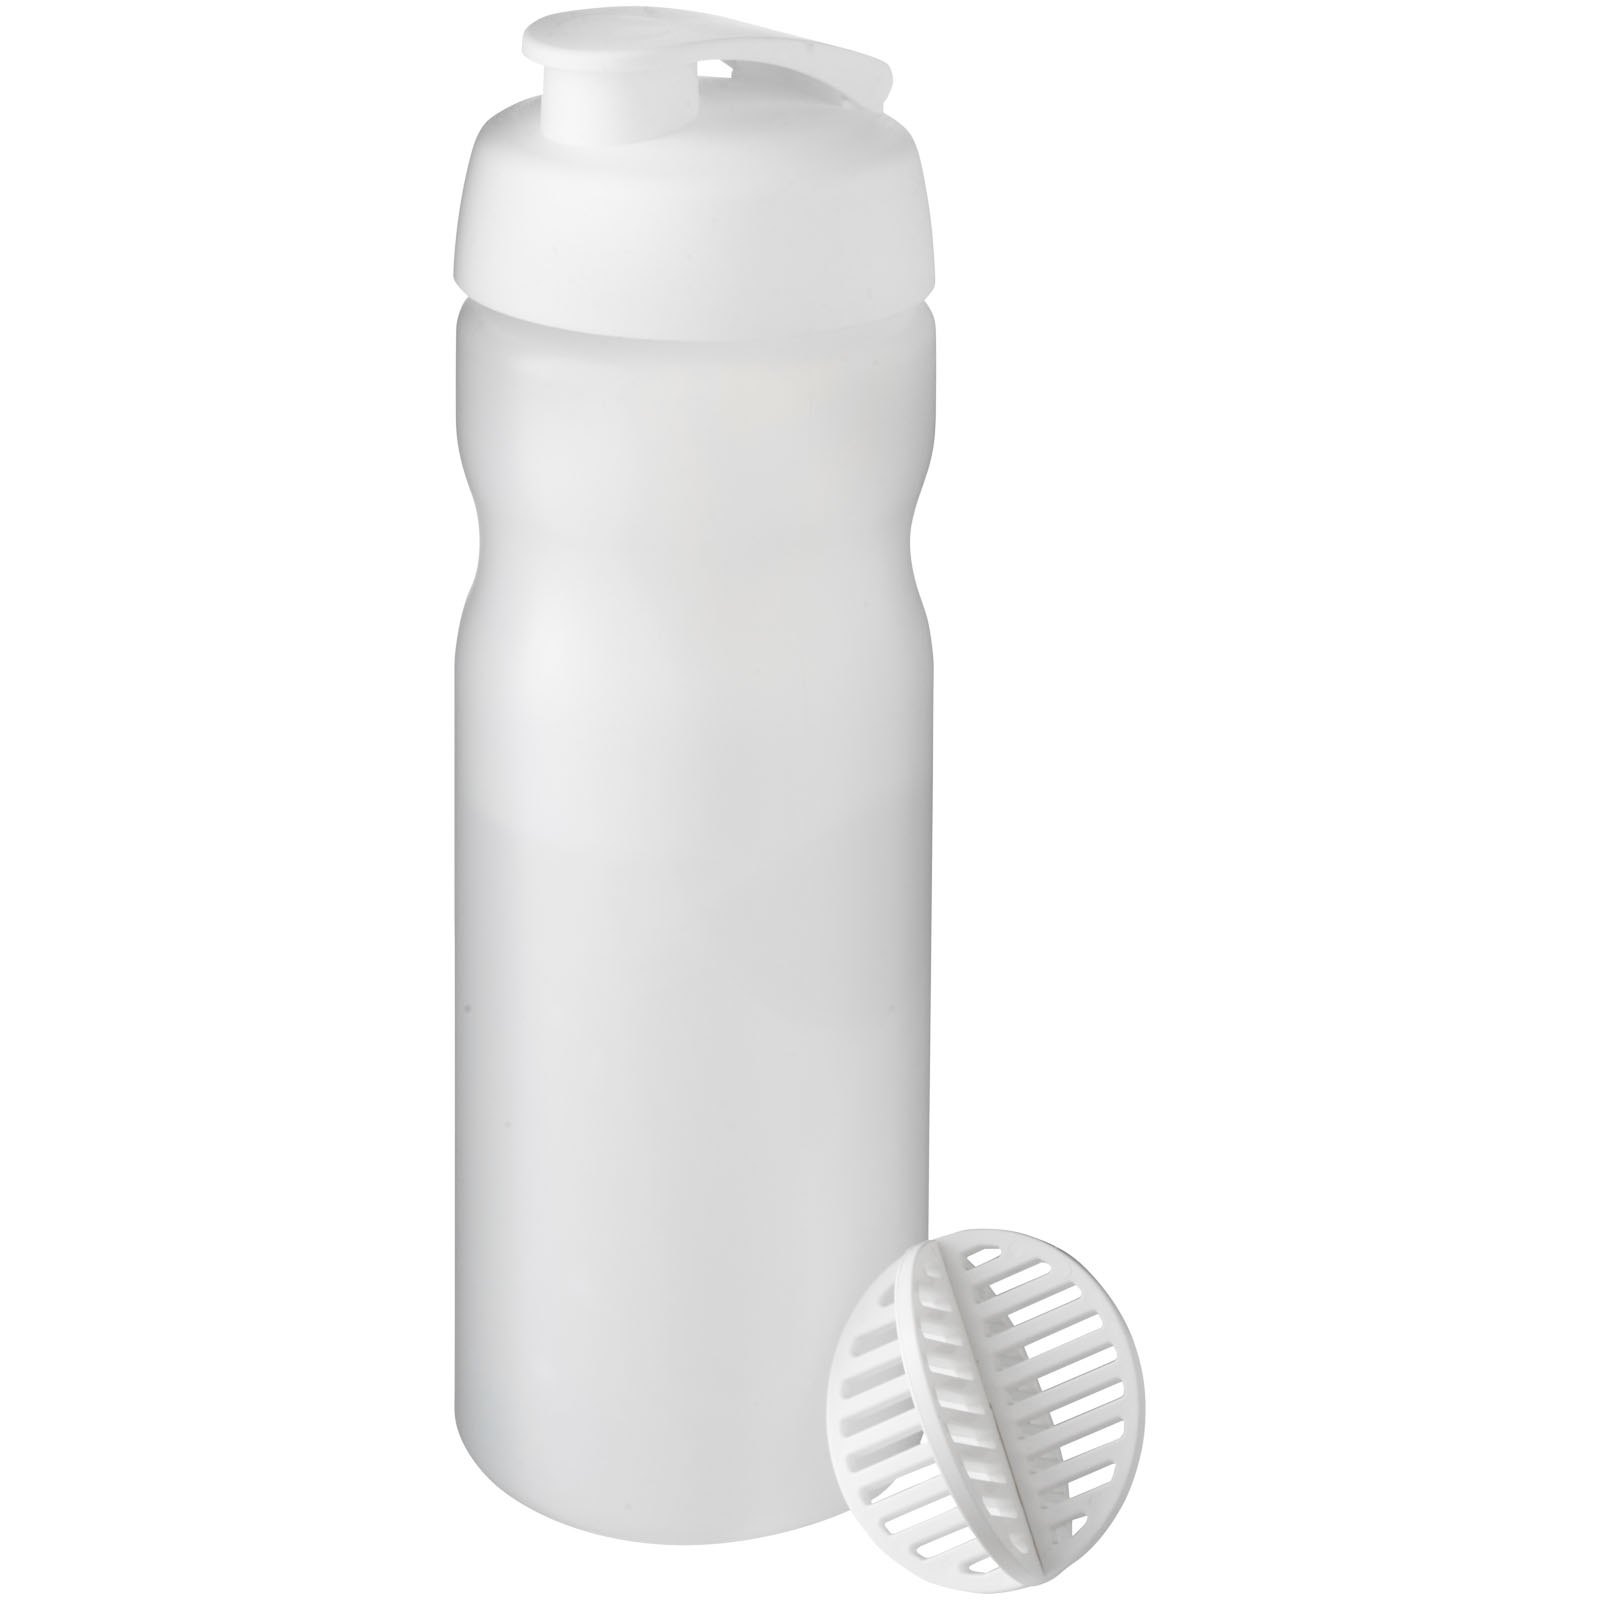 ProMix Shaker Bottle - Nether Wallop - Buxton